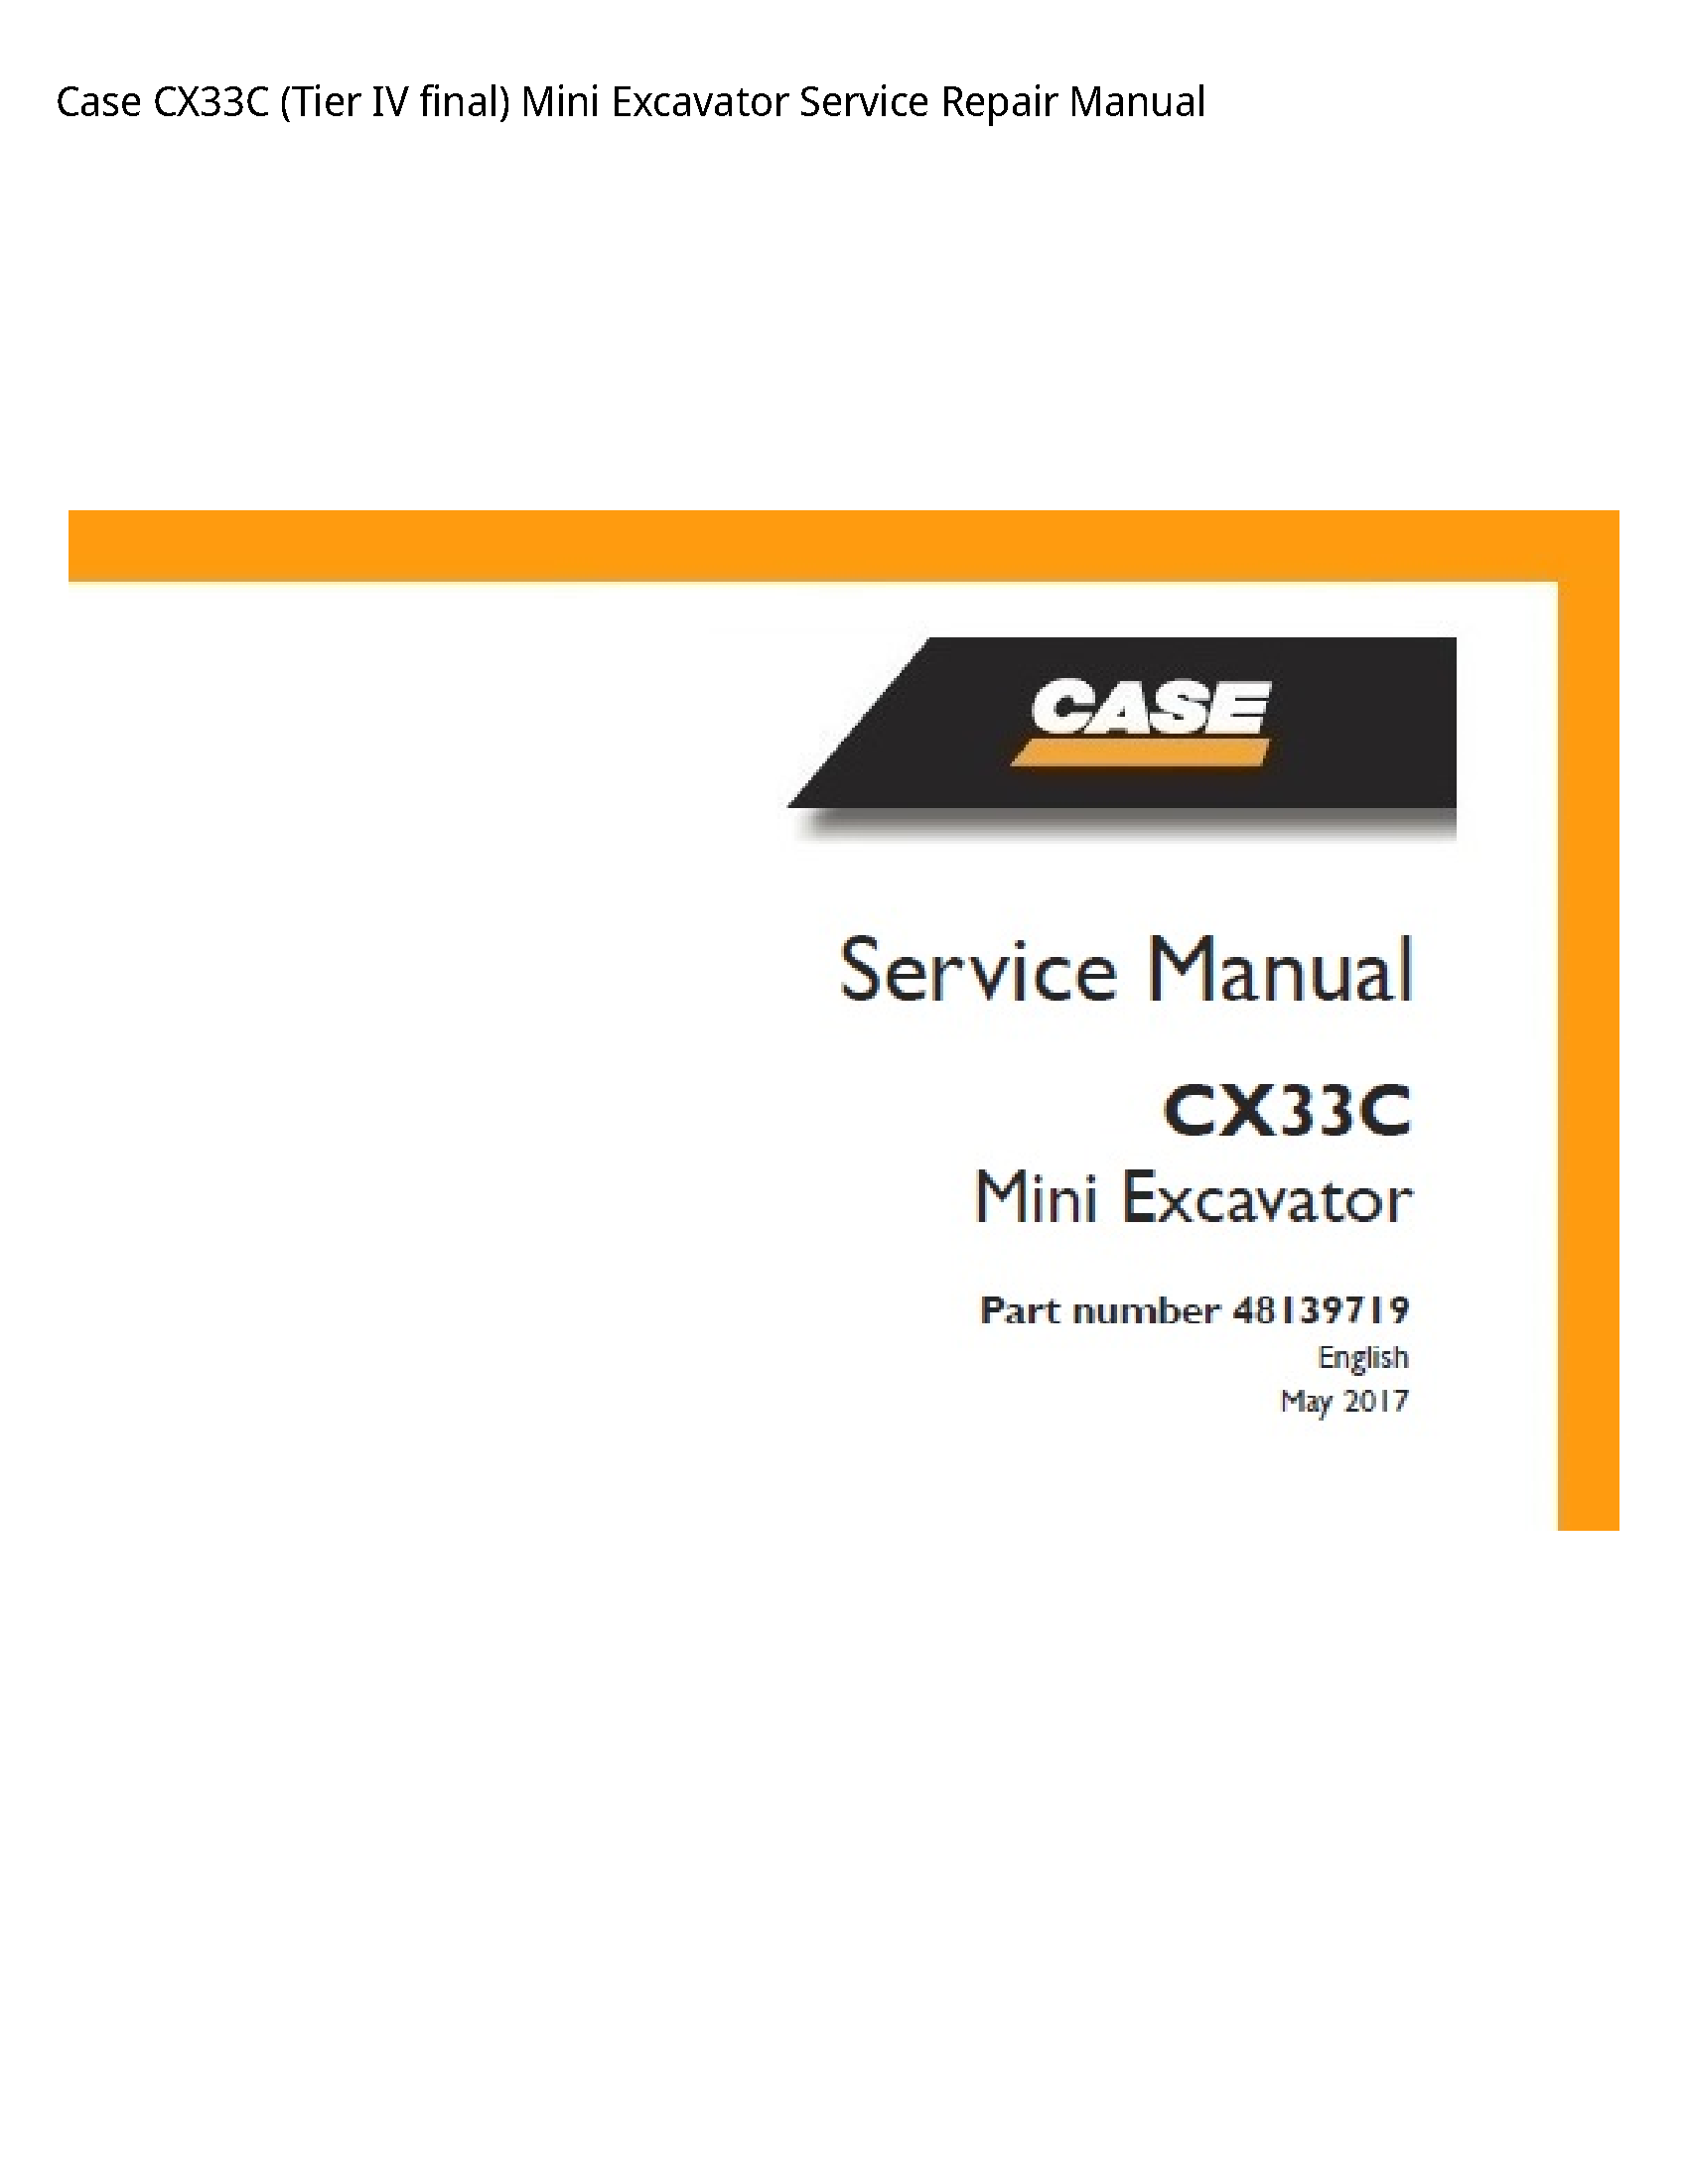 Case/Case IH CX33C (Tier IV final) Mini Excavator manual